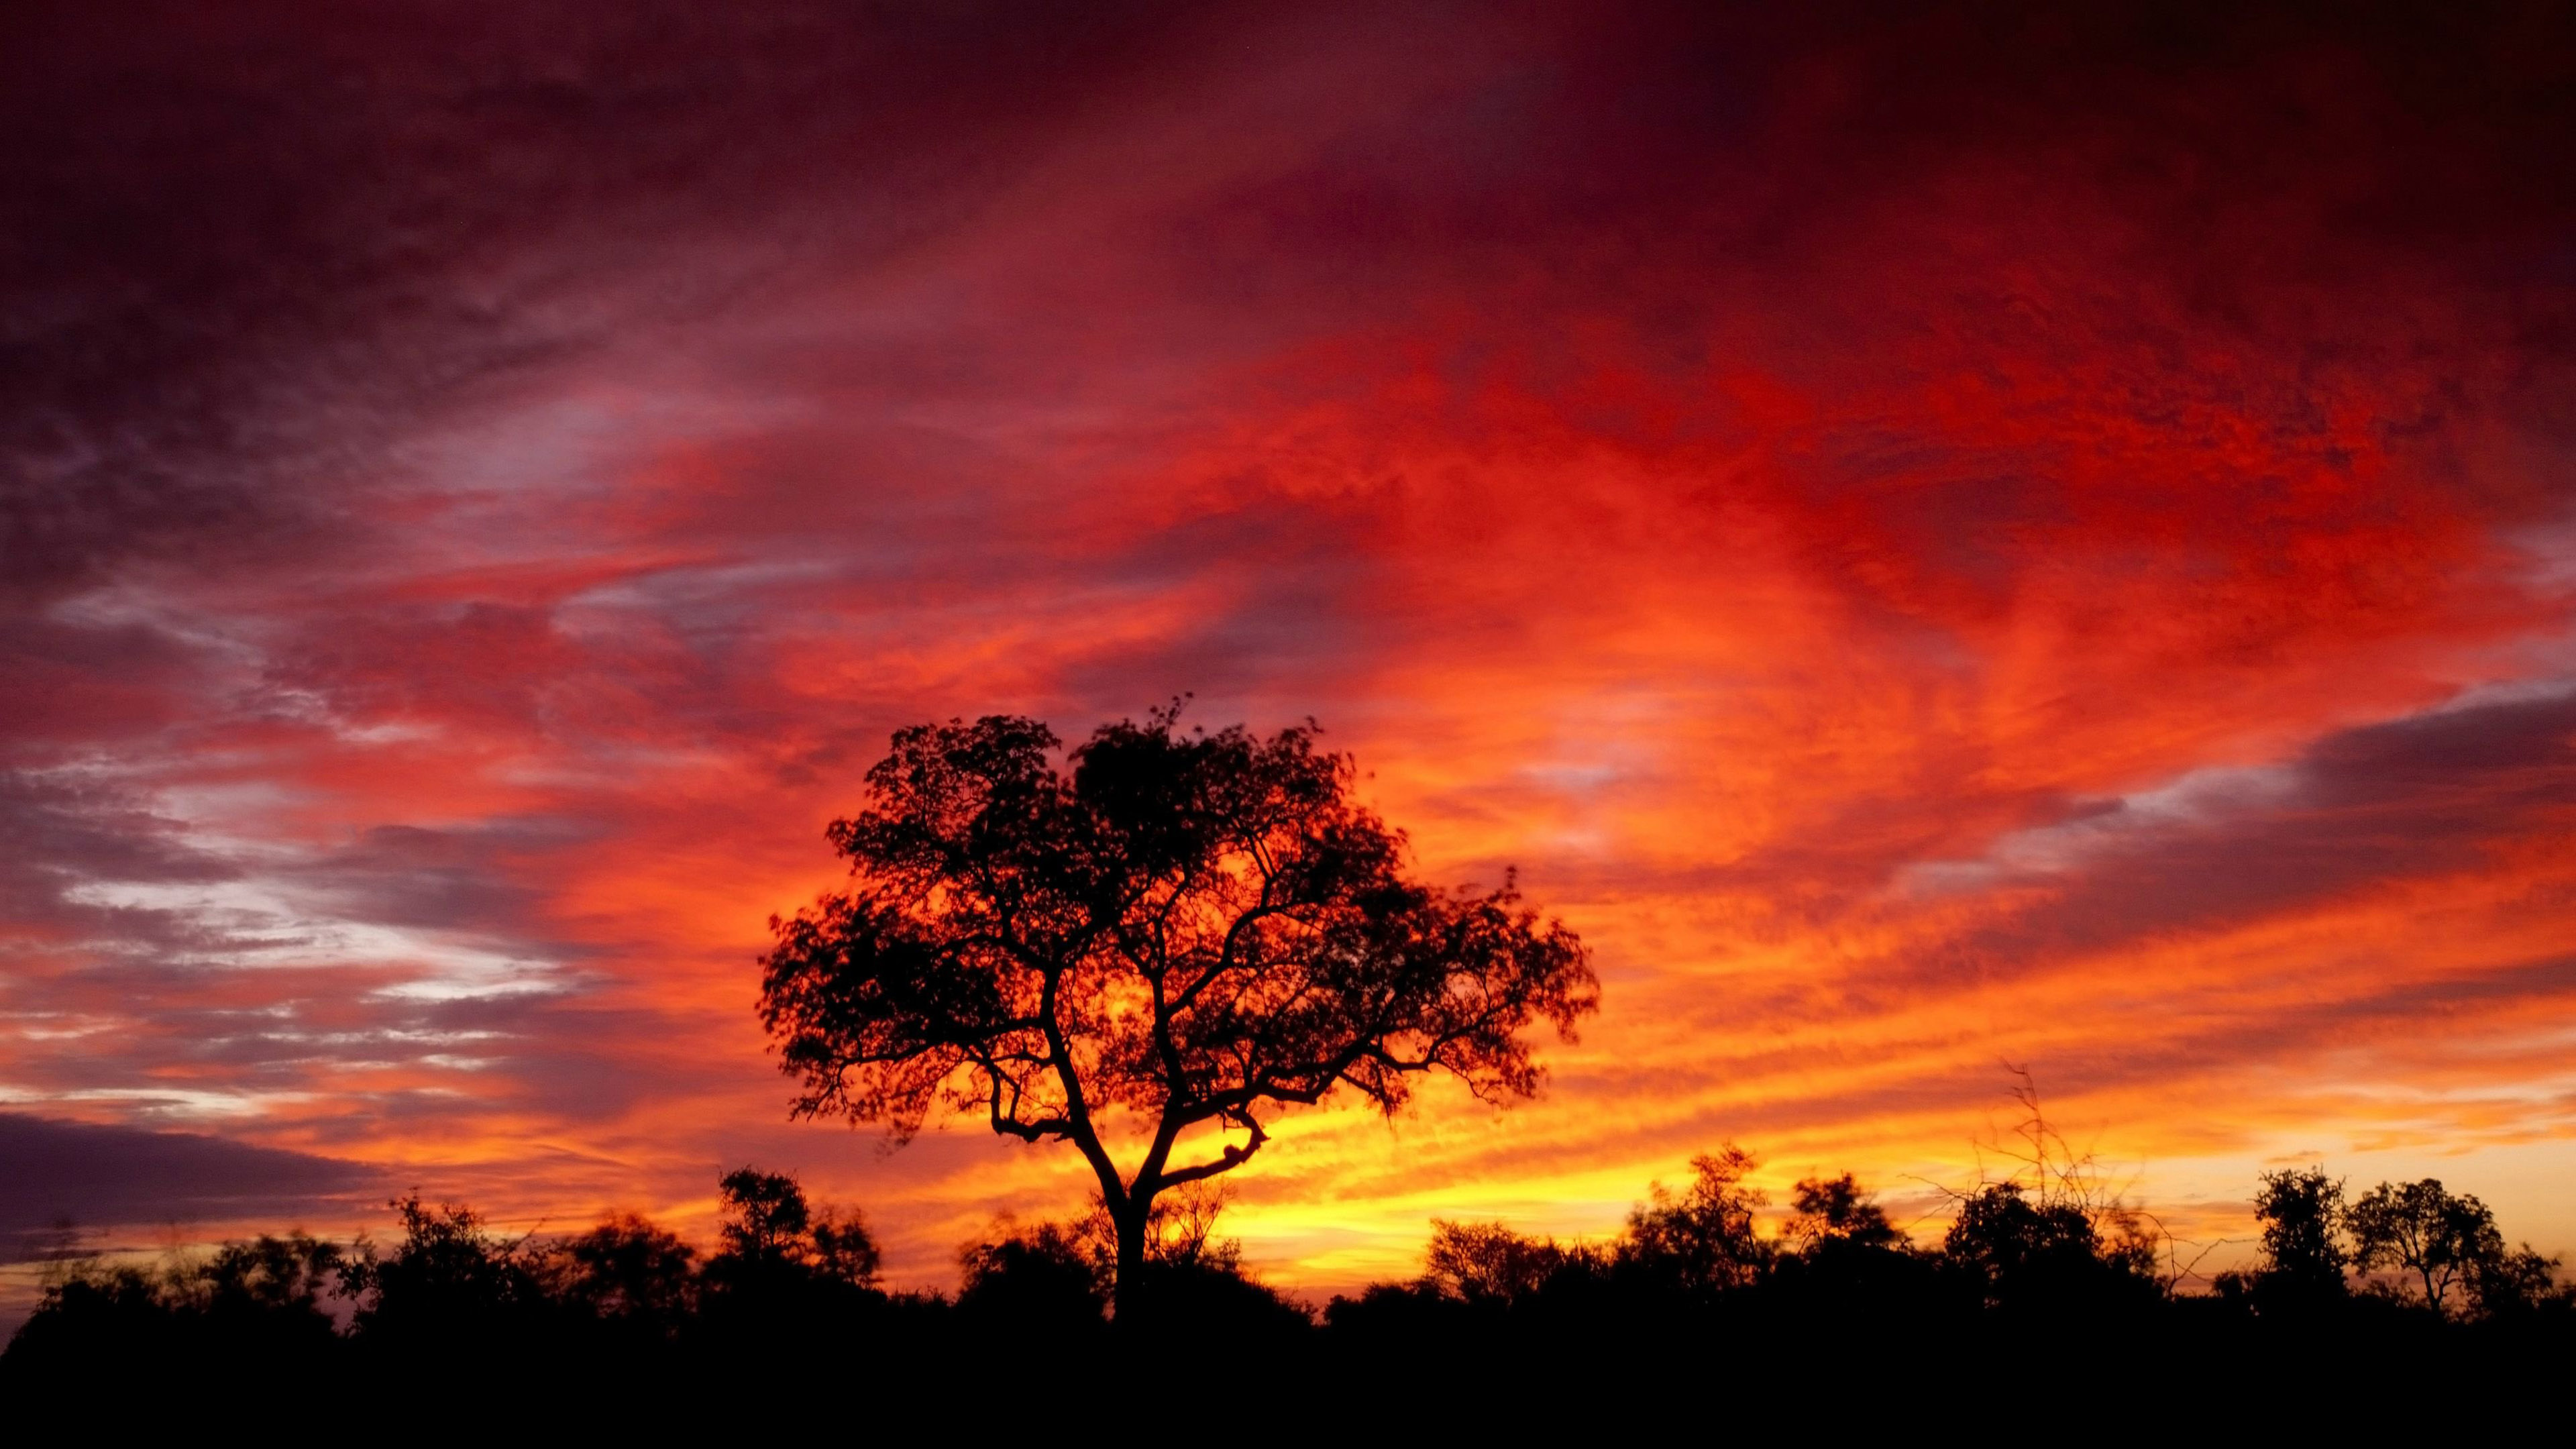 South Africa Savna Sky With Red Cloud Eclipse Sunset Desktop Wallpaper Hd Resolution Wallpapers13 Com